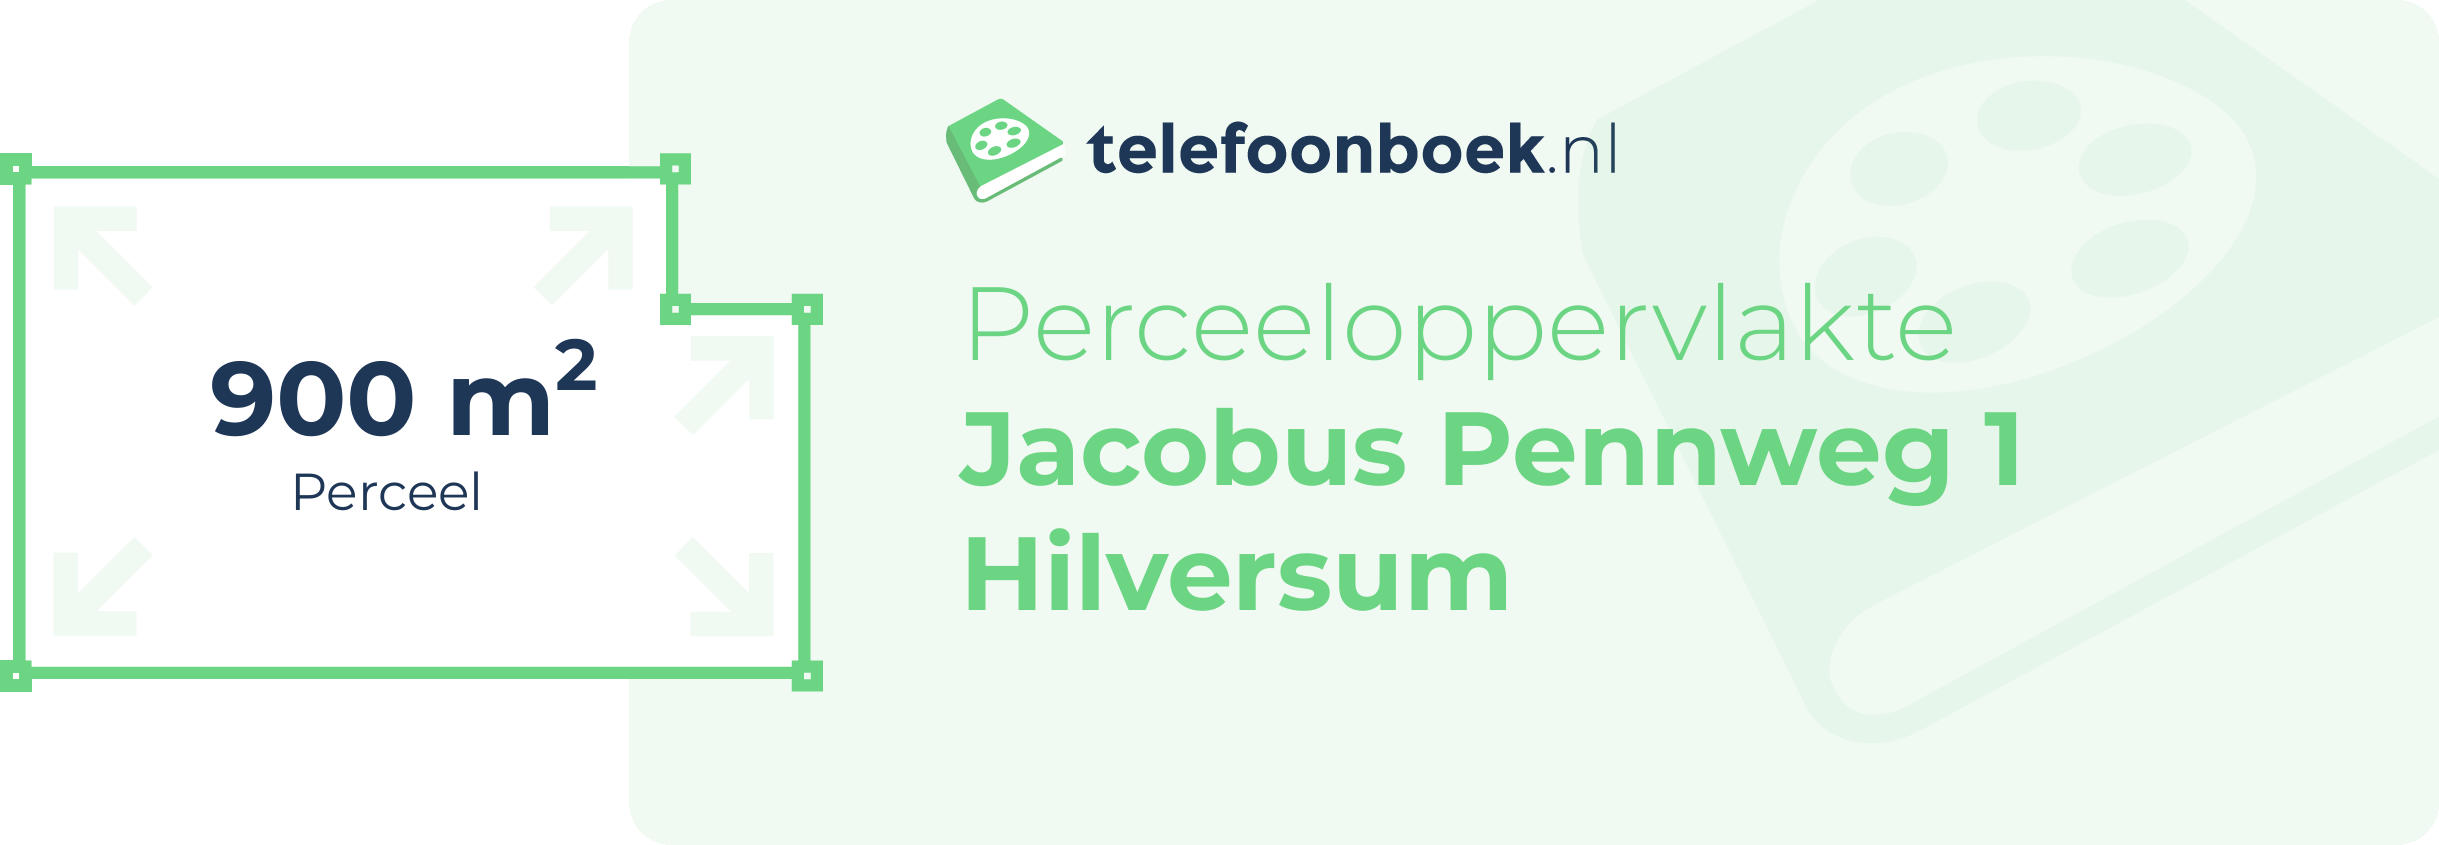 Perceeloppervlakte Jacobus Pennweg 1 Hilversum